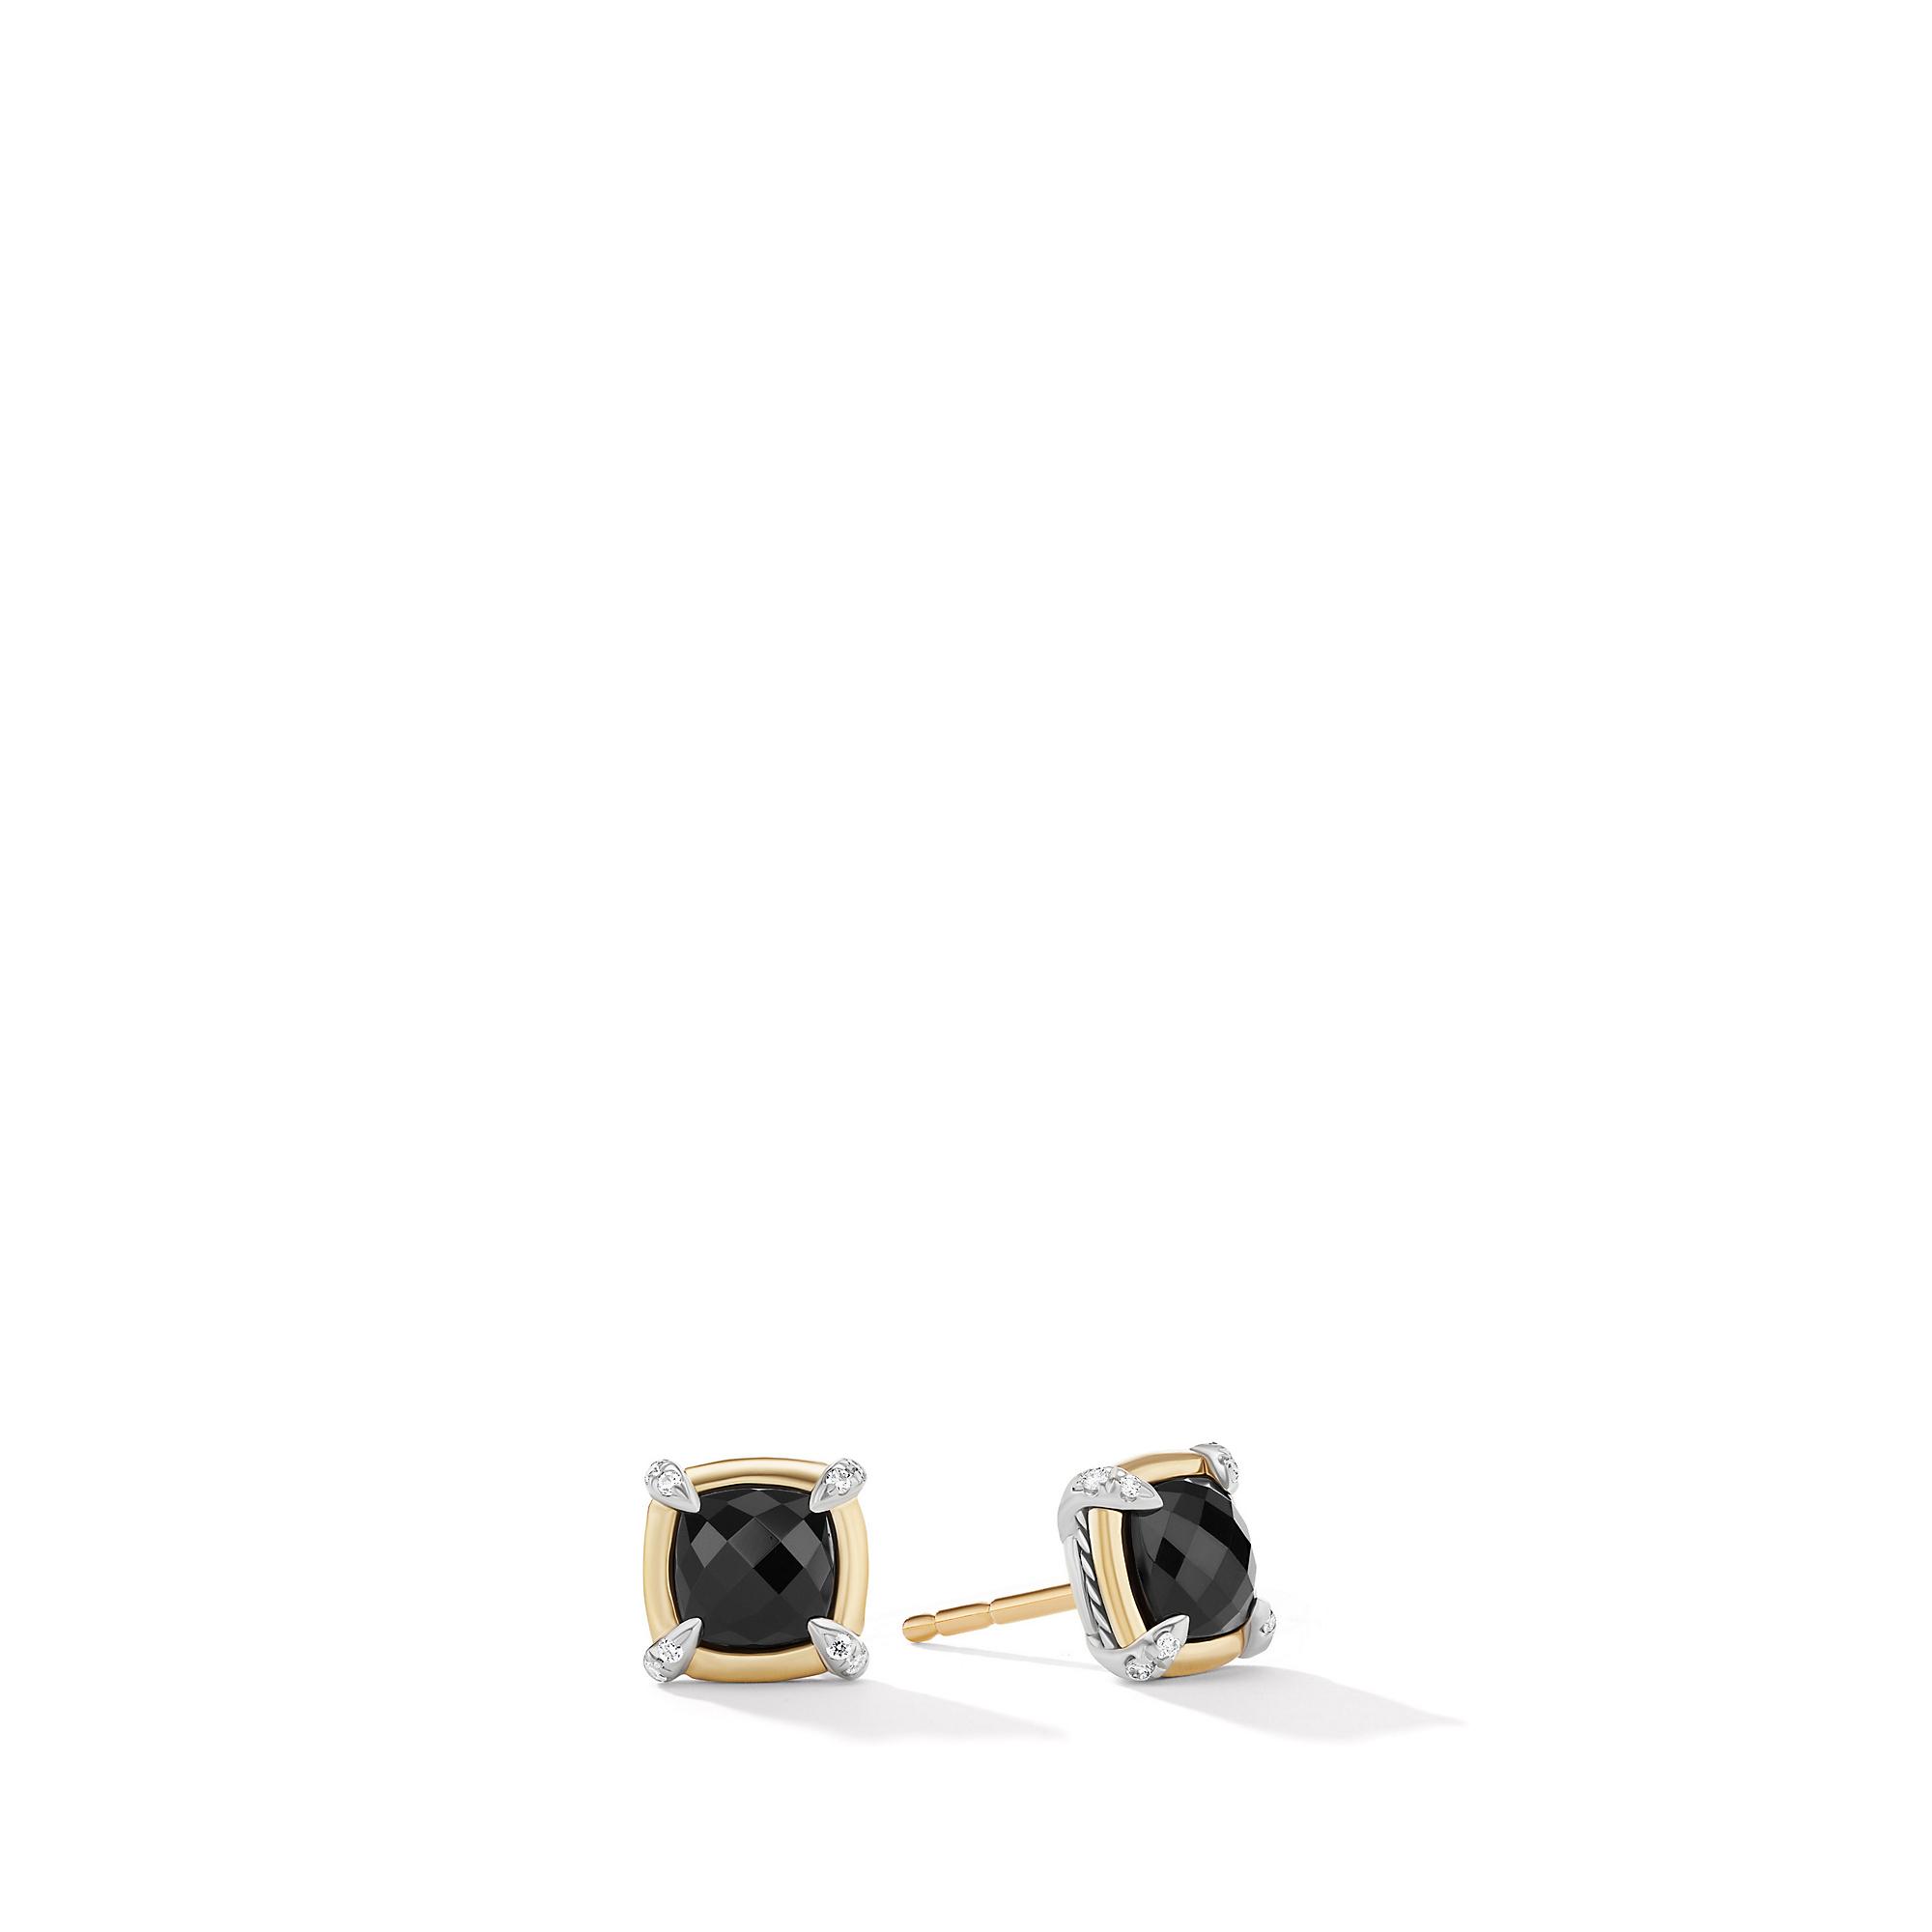 David Yurman Petite Chatelaine Stud Earrings with Black Onyx in 18k Yellow Gold Bezel with Diamonds